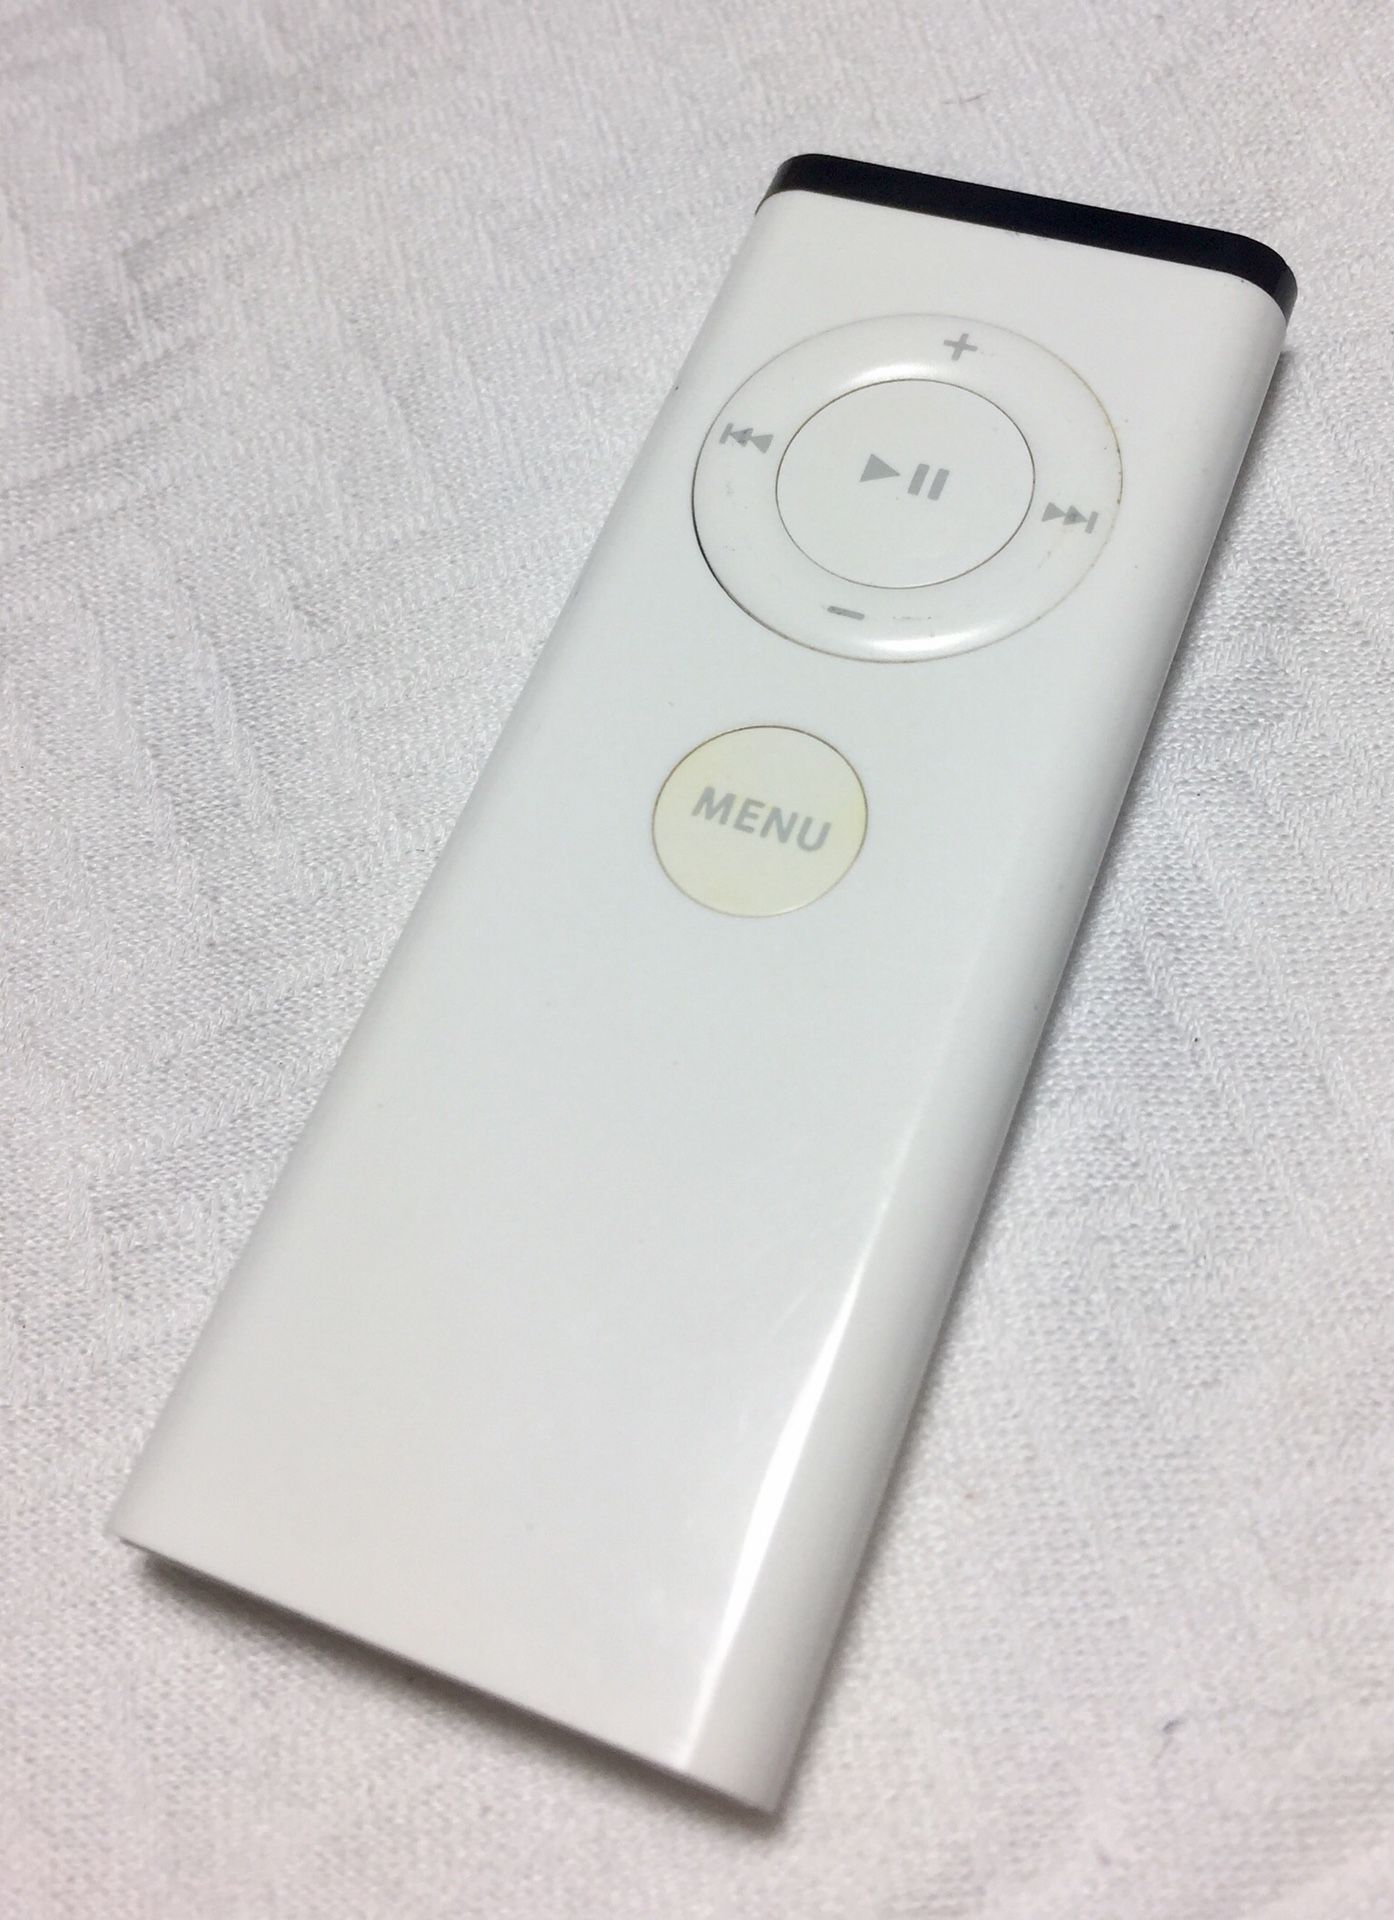 Apple TV Remote (Model 1156)